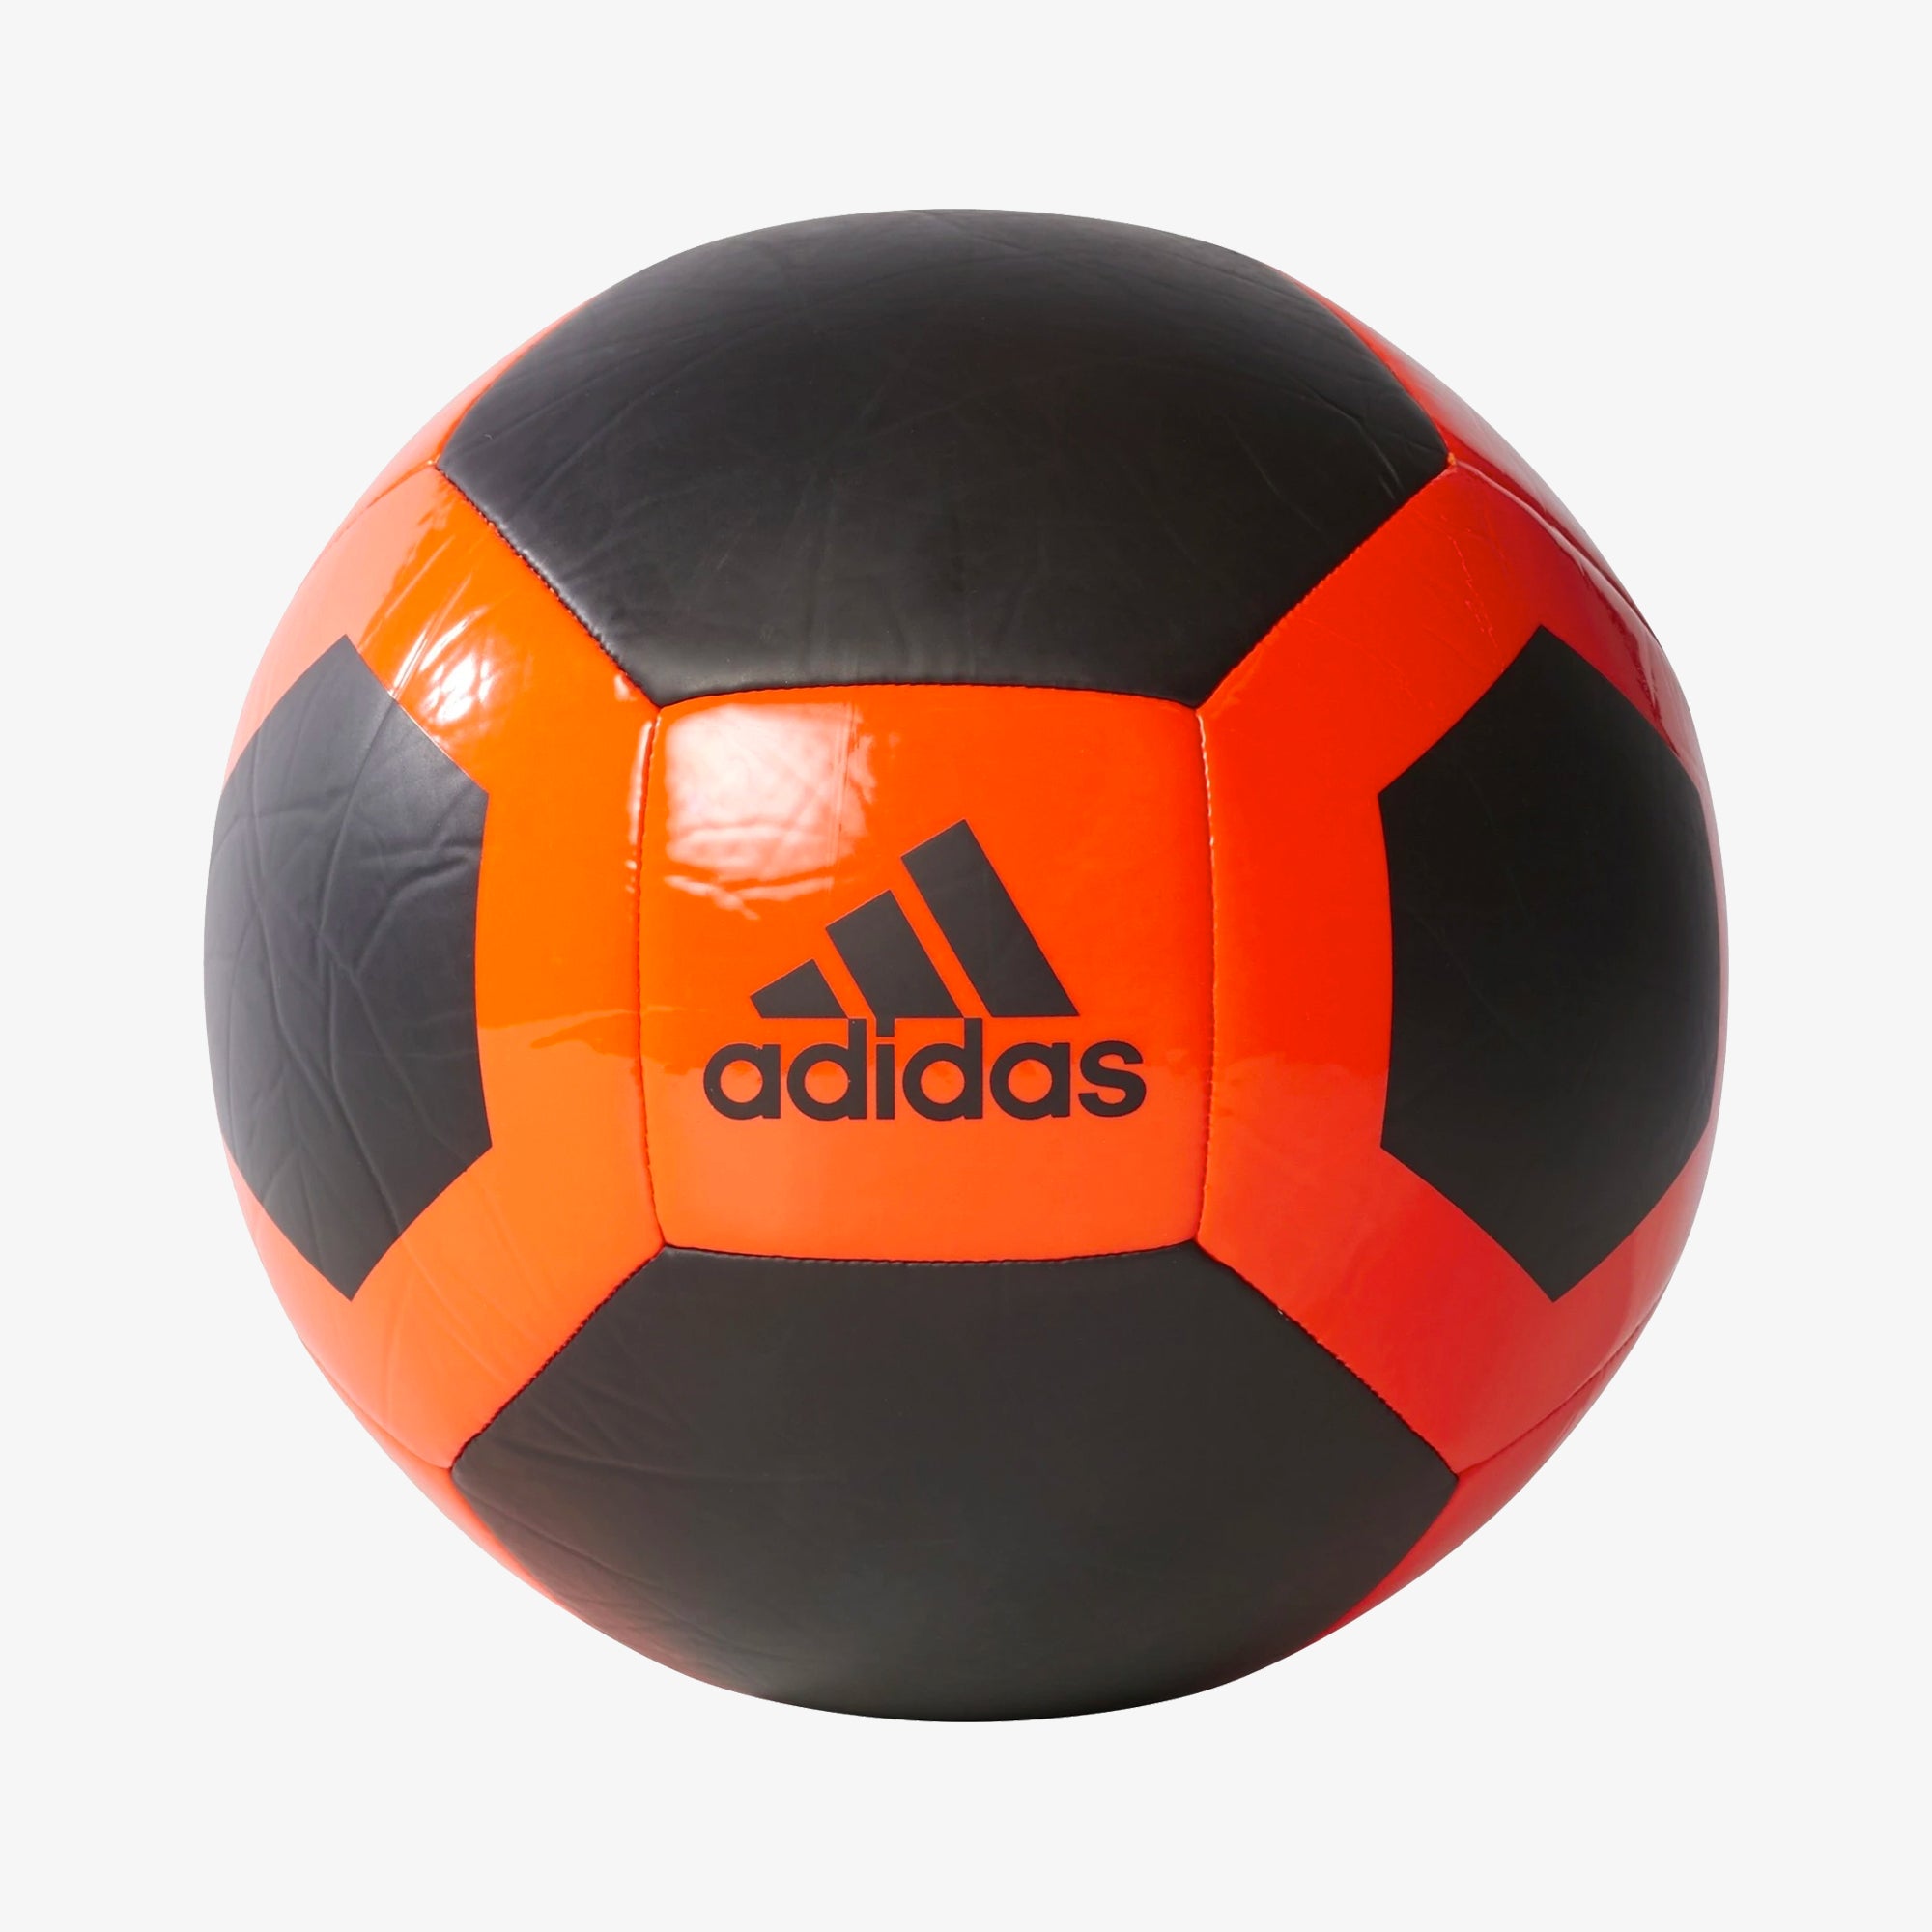 adidas soccer ball drawings